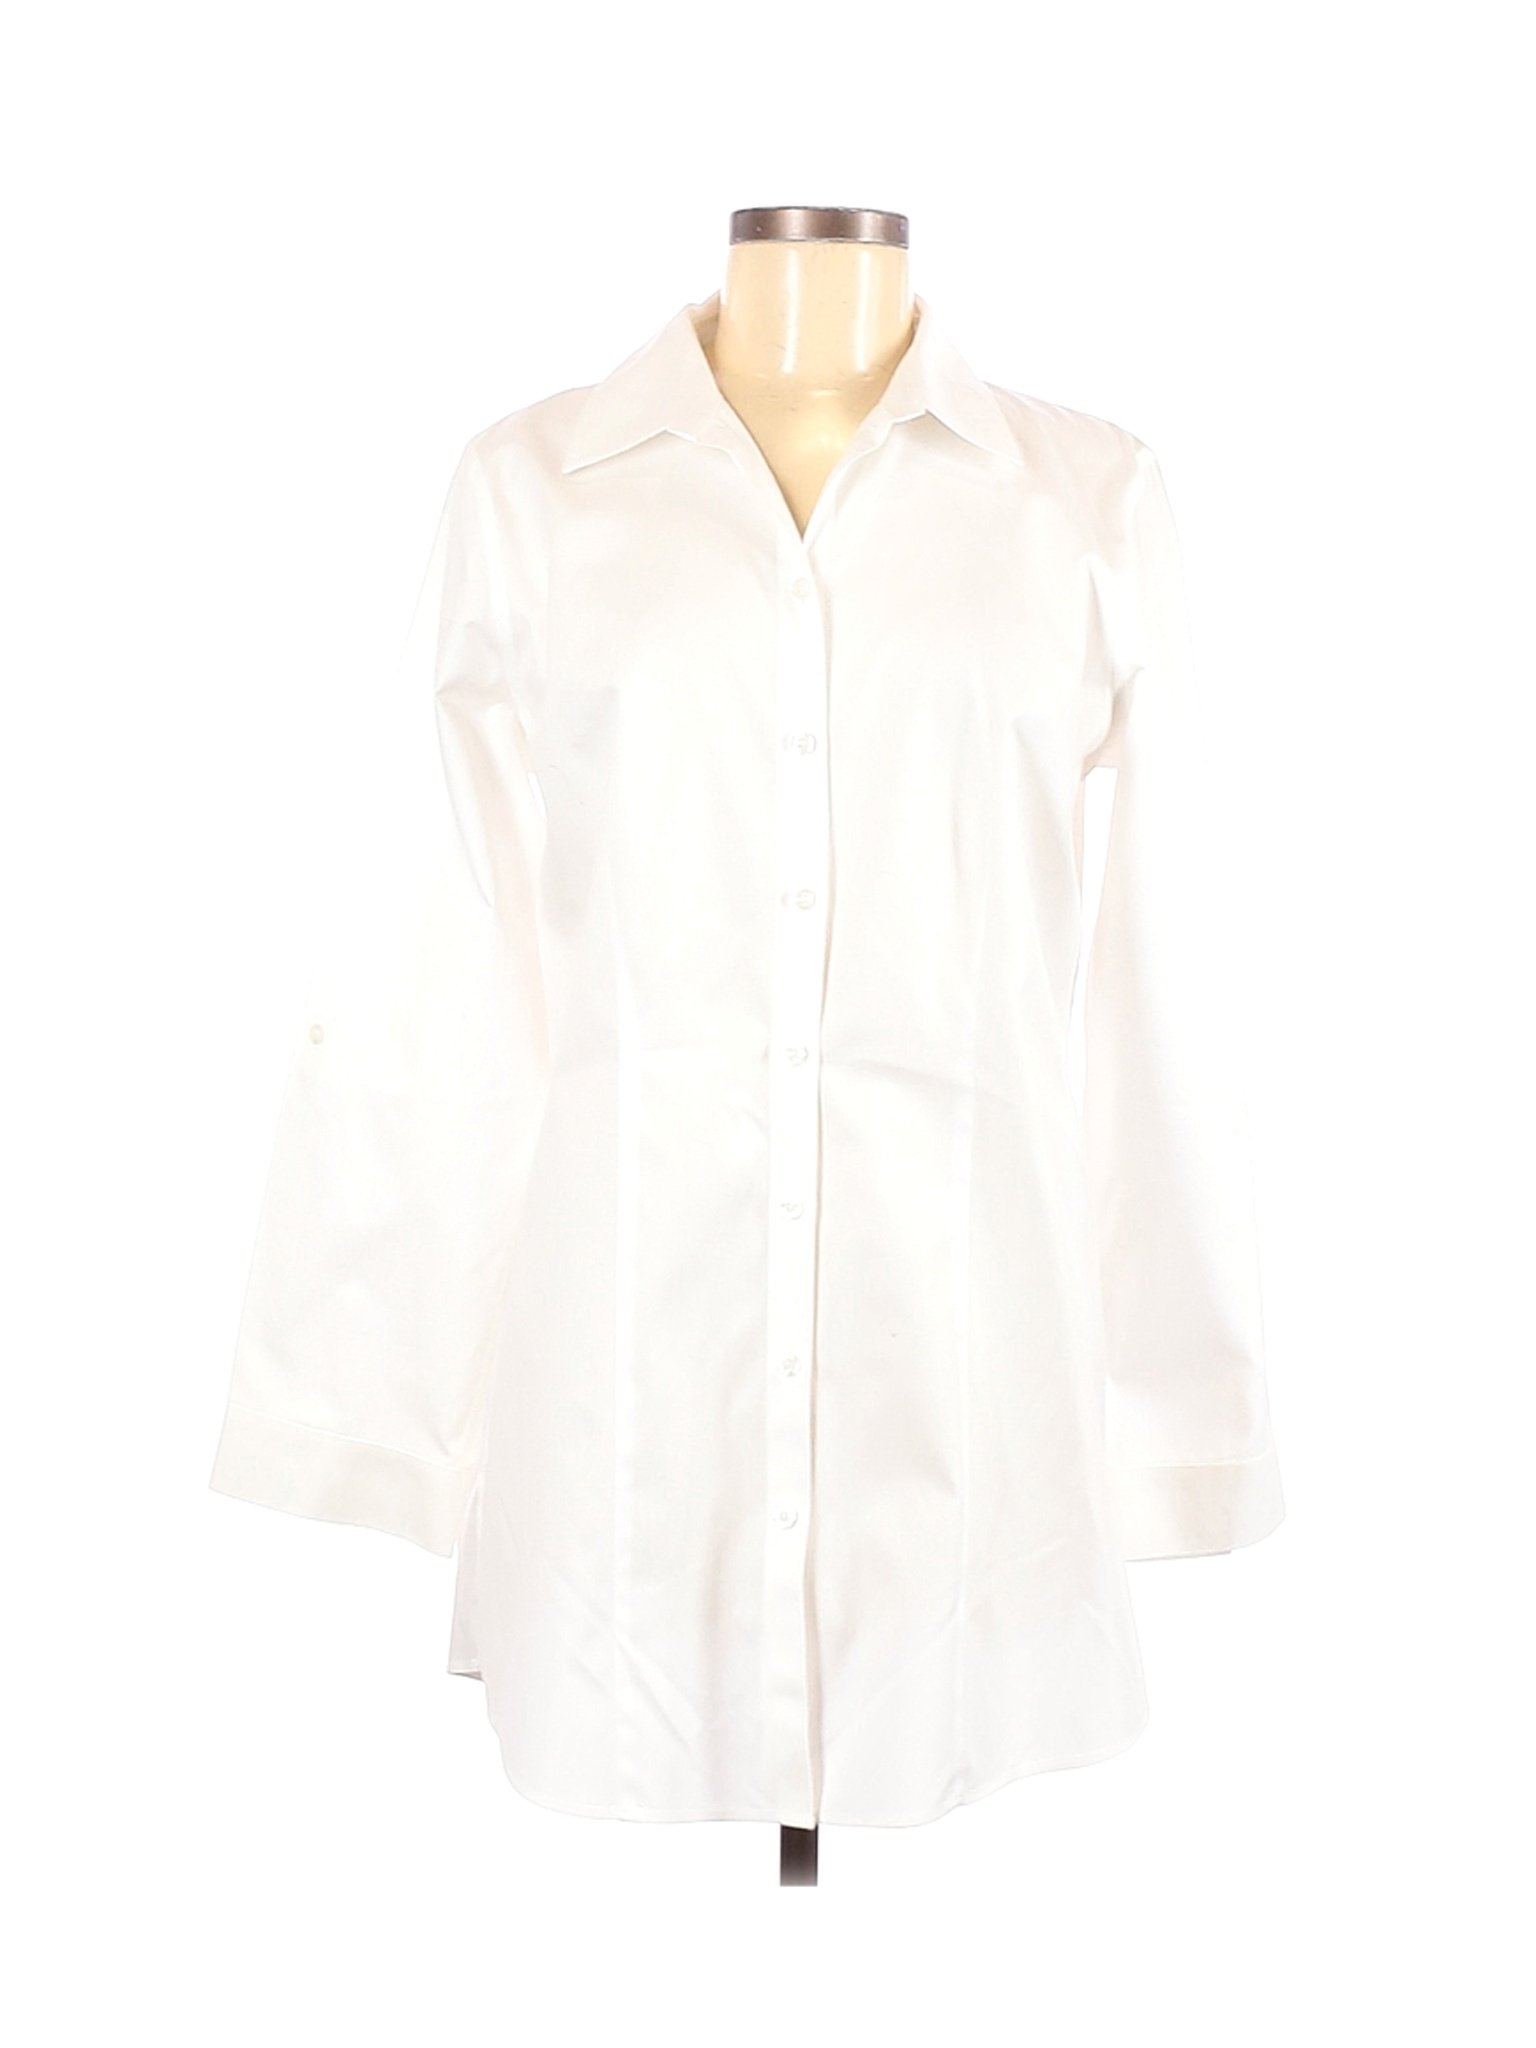 Chico's Women White Long Sleeve Button-Down Shirt M | eBay